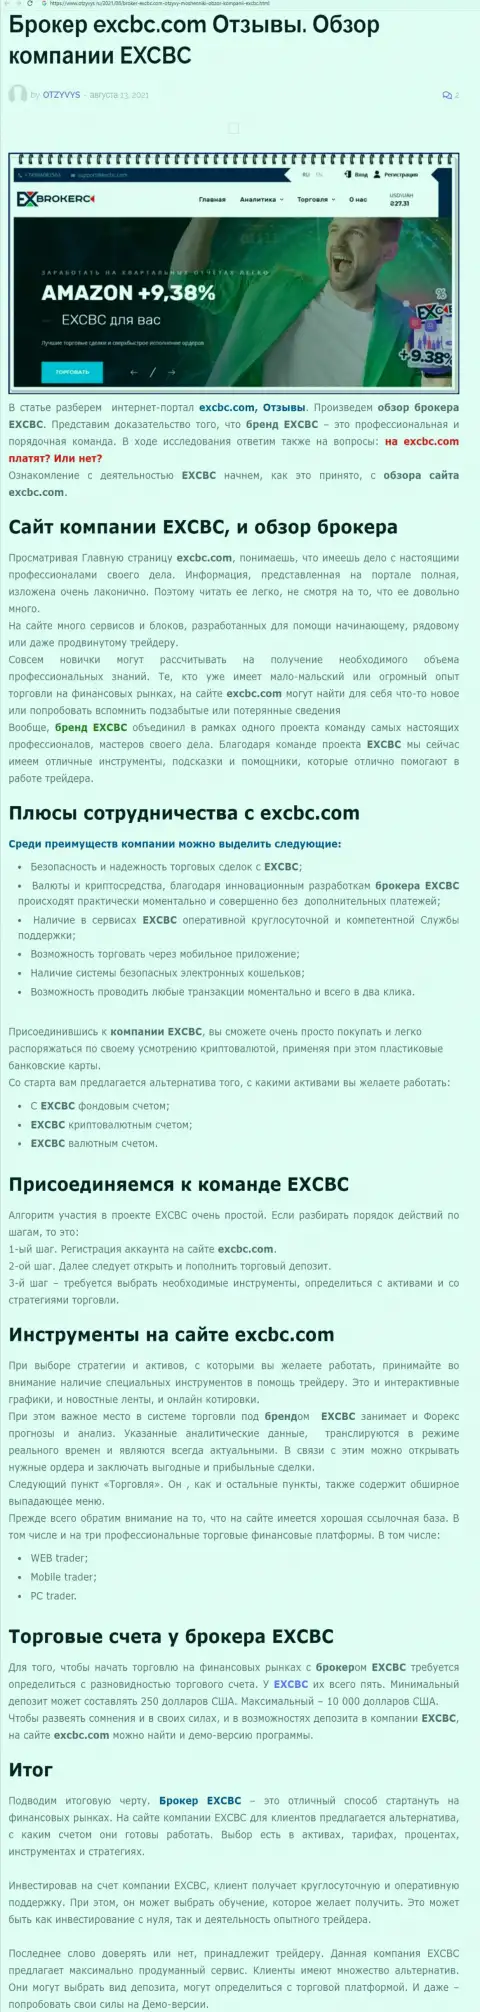 Обзорный материал о Форекс дилинговом центре EXCBC на web-сервисе Отзывс Ру